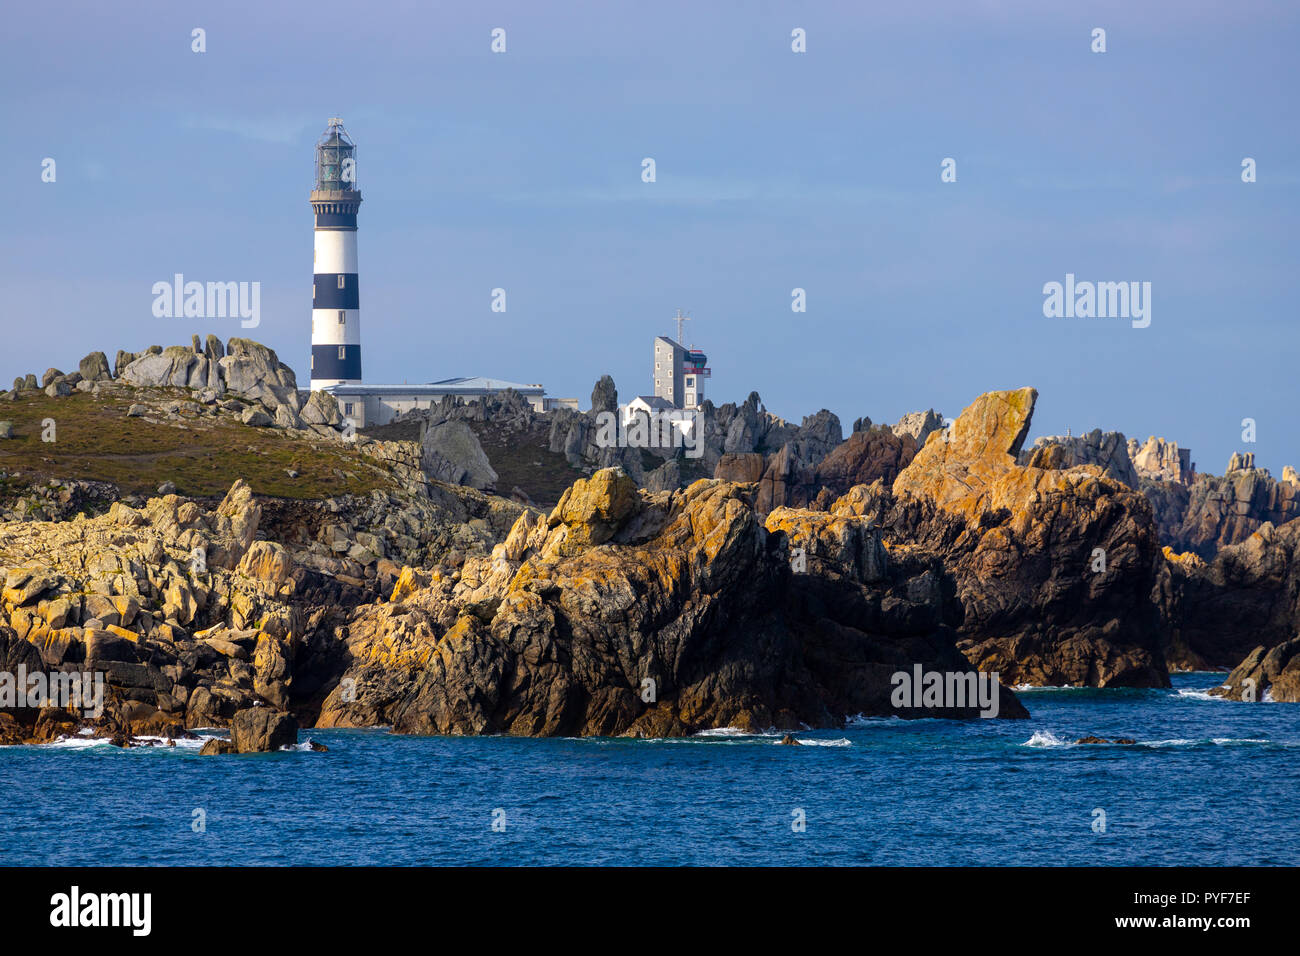 The Creach lighthouse on the sharp and rocky coastline of the Ushant island, Brittany, France Stock Photo